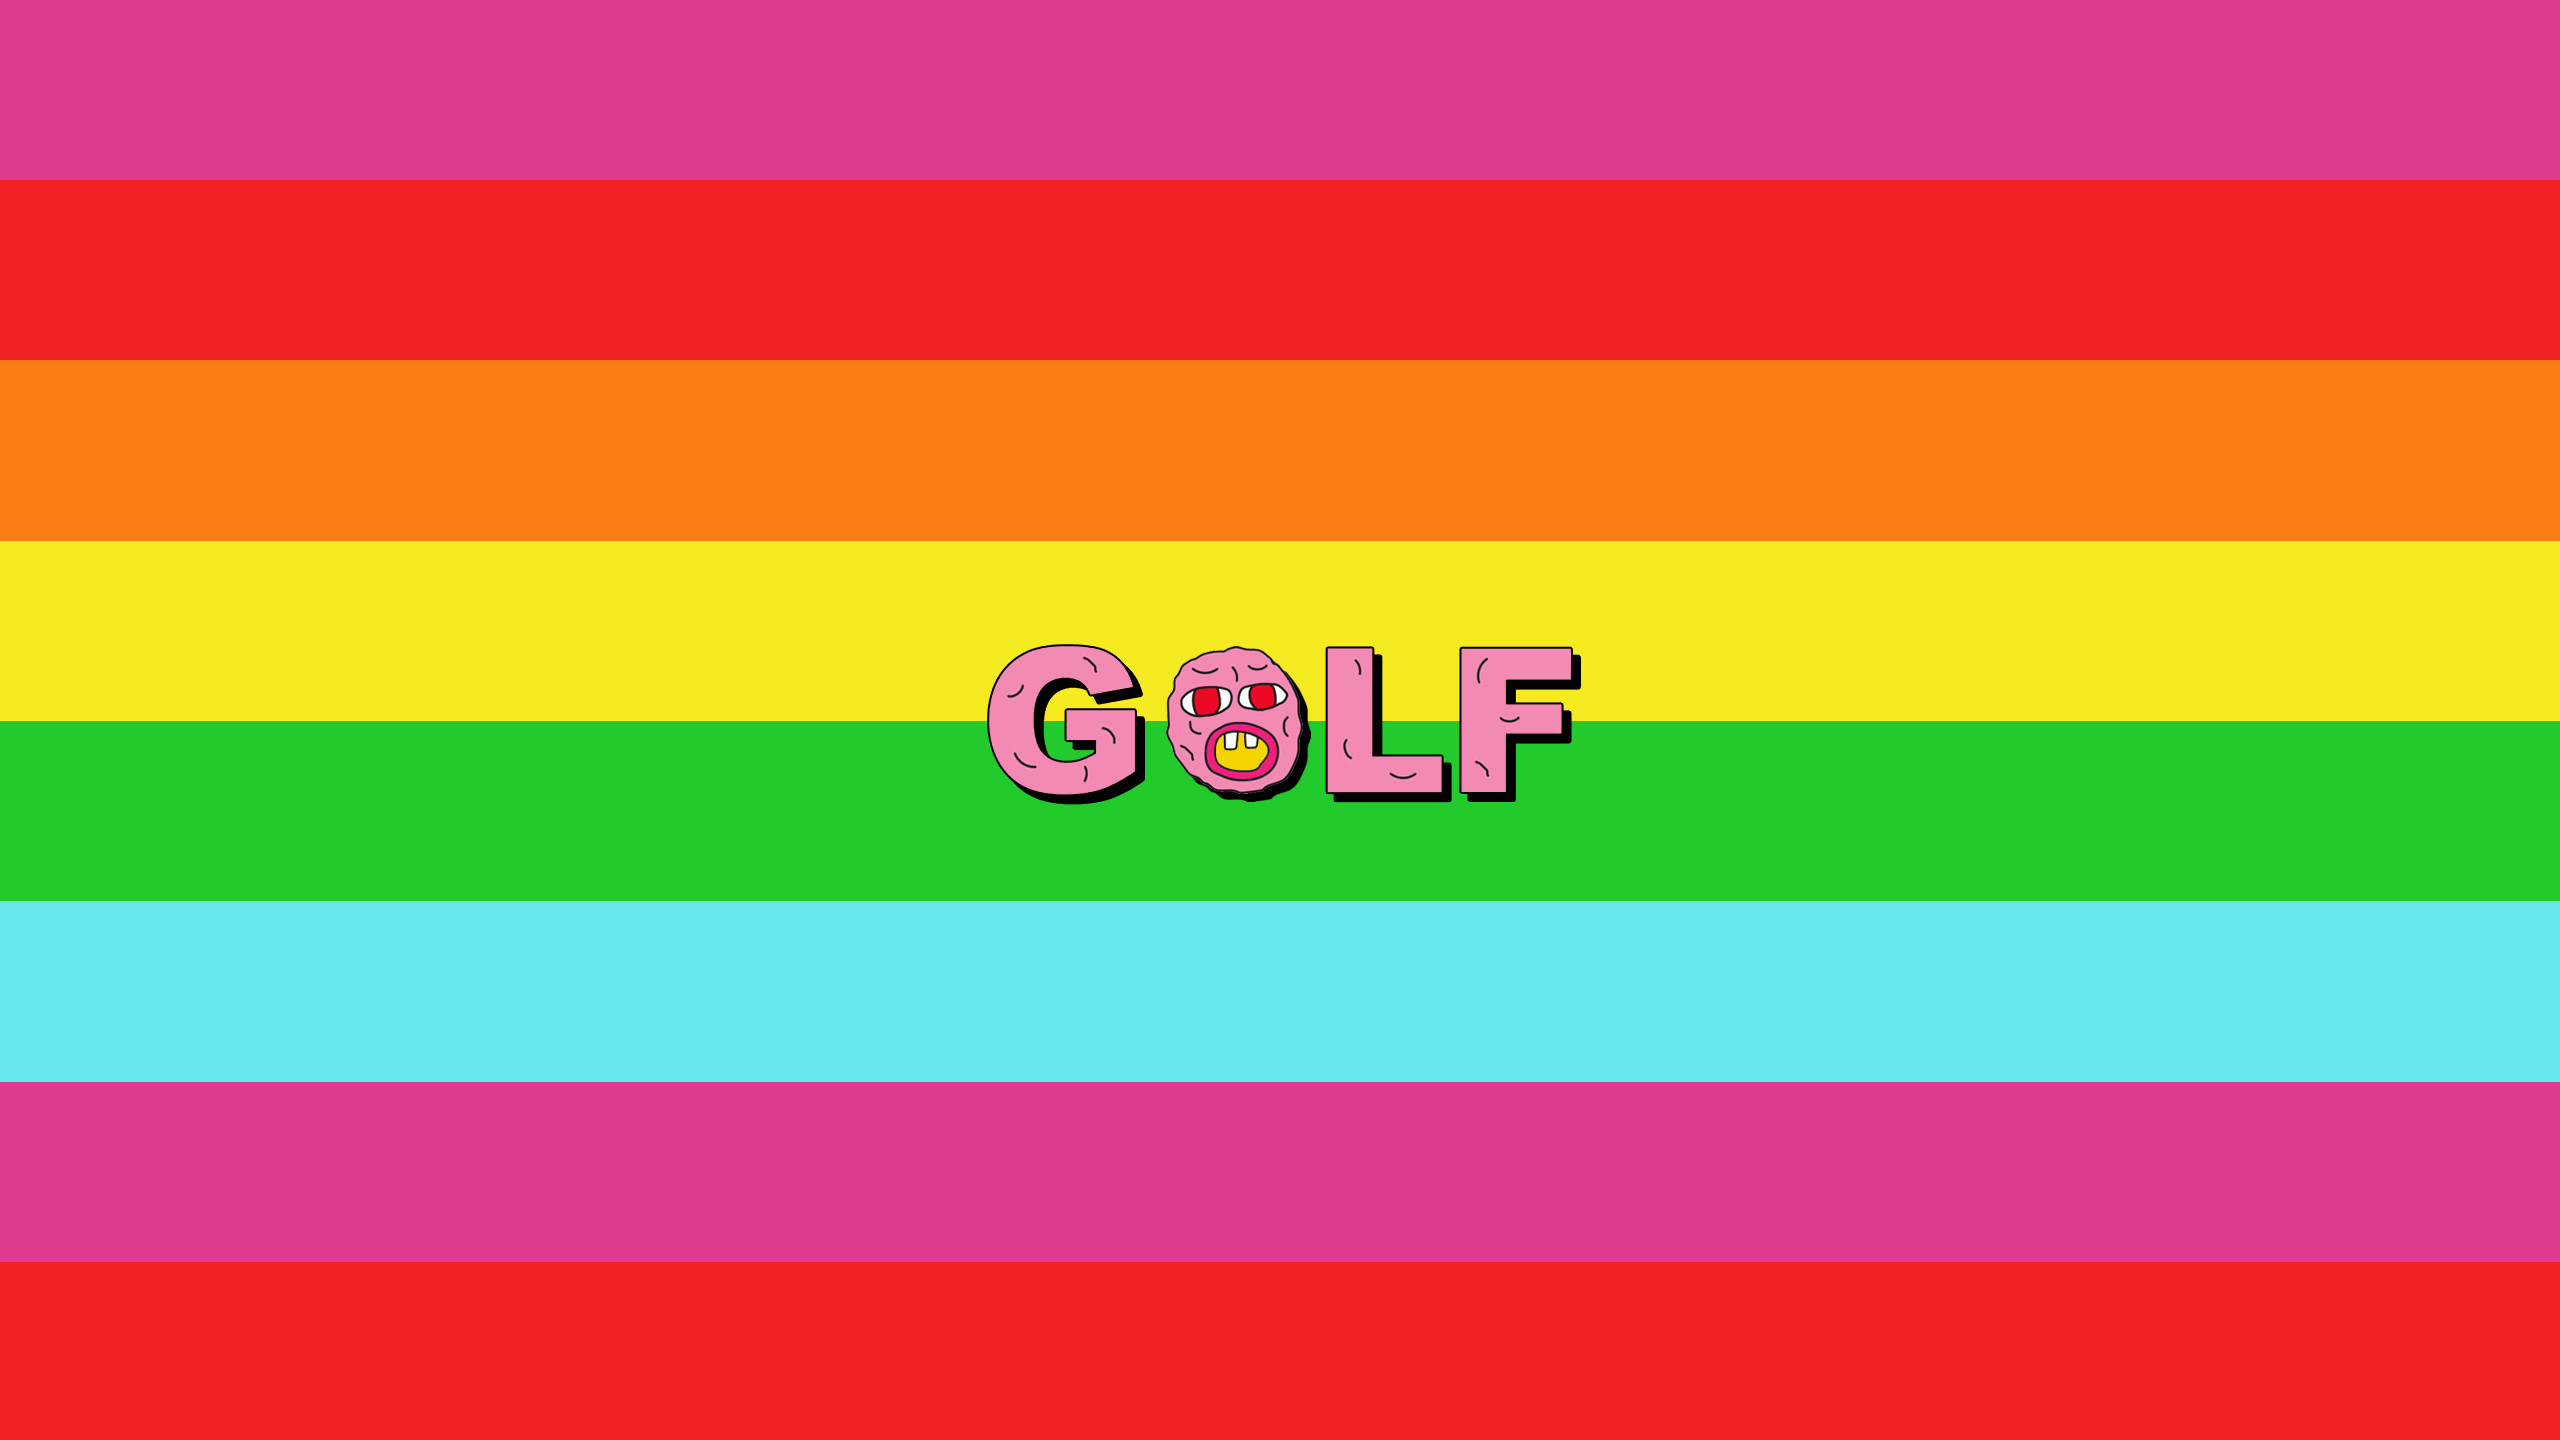 Golf Pride